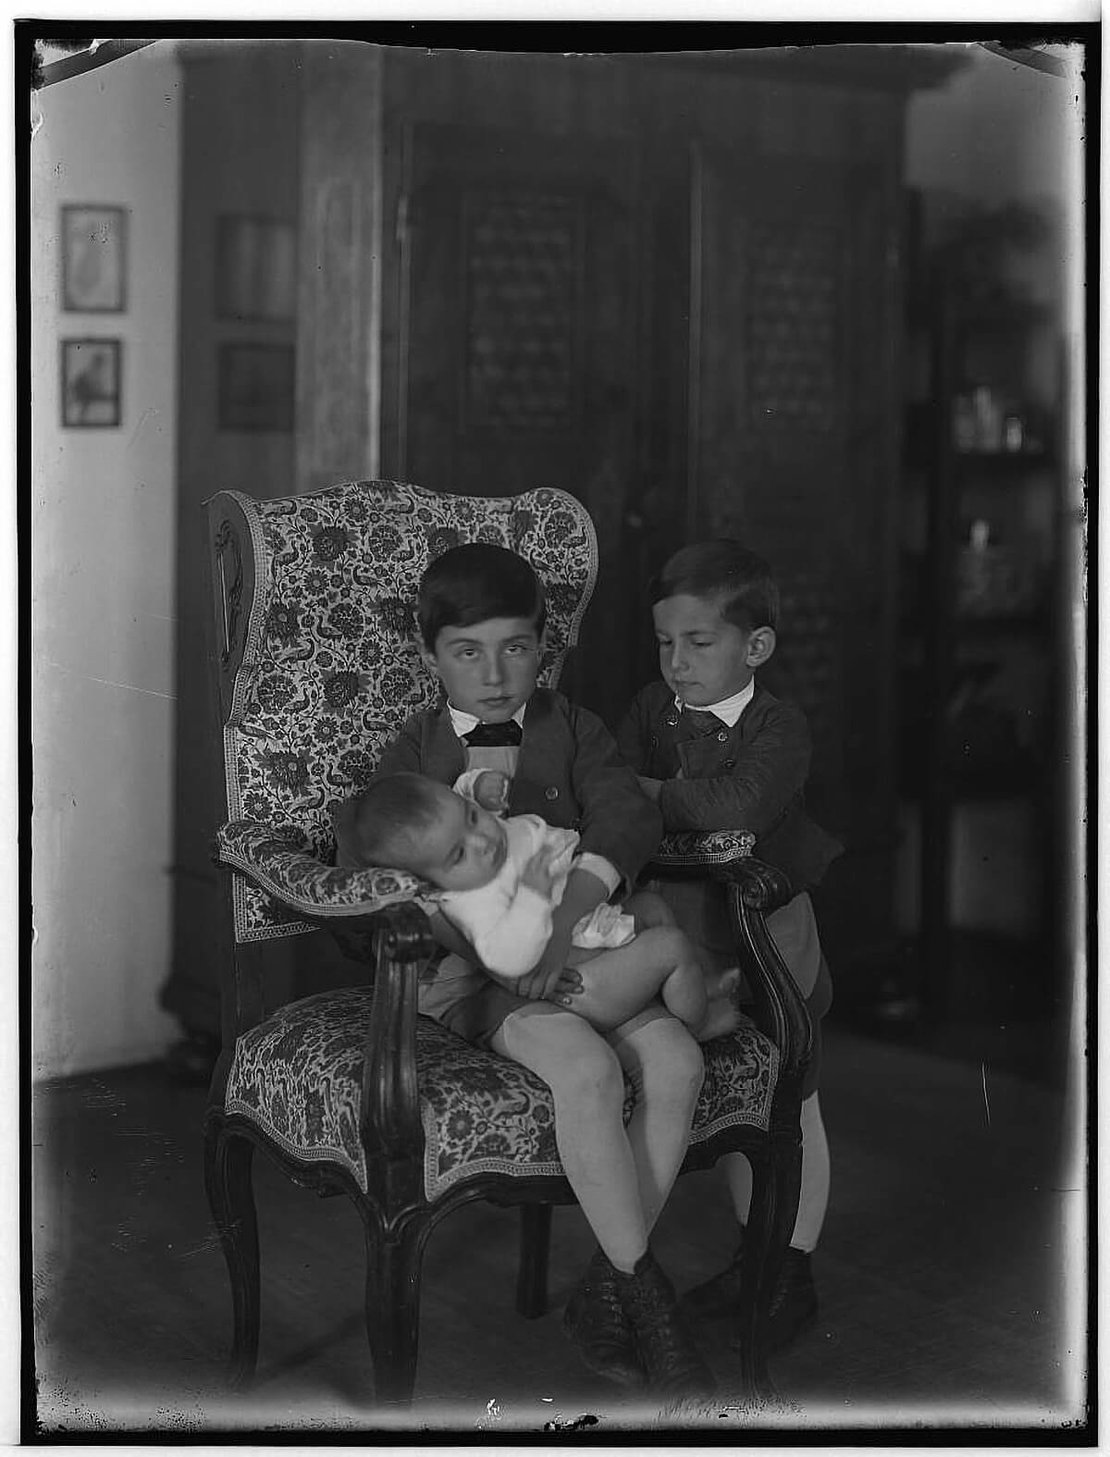 Martin Gerlach jun.: Drei Kinder der Familie Mautner, vor 1924, Wien Museum 